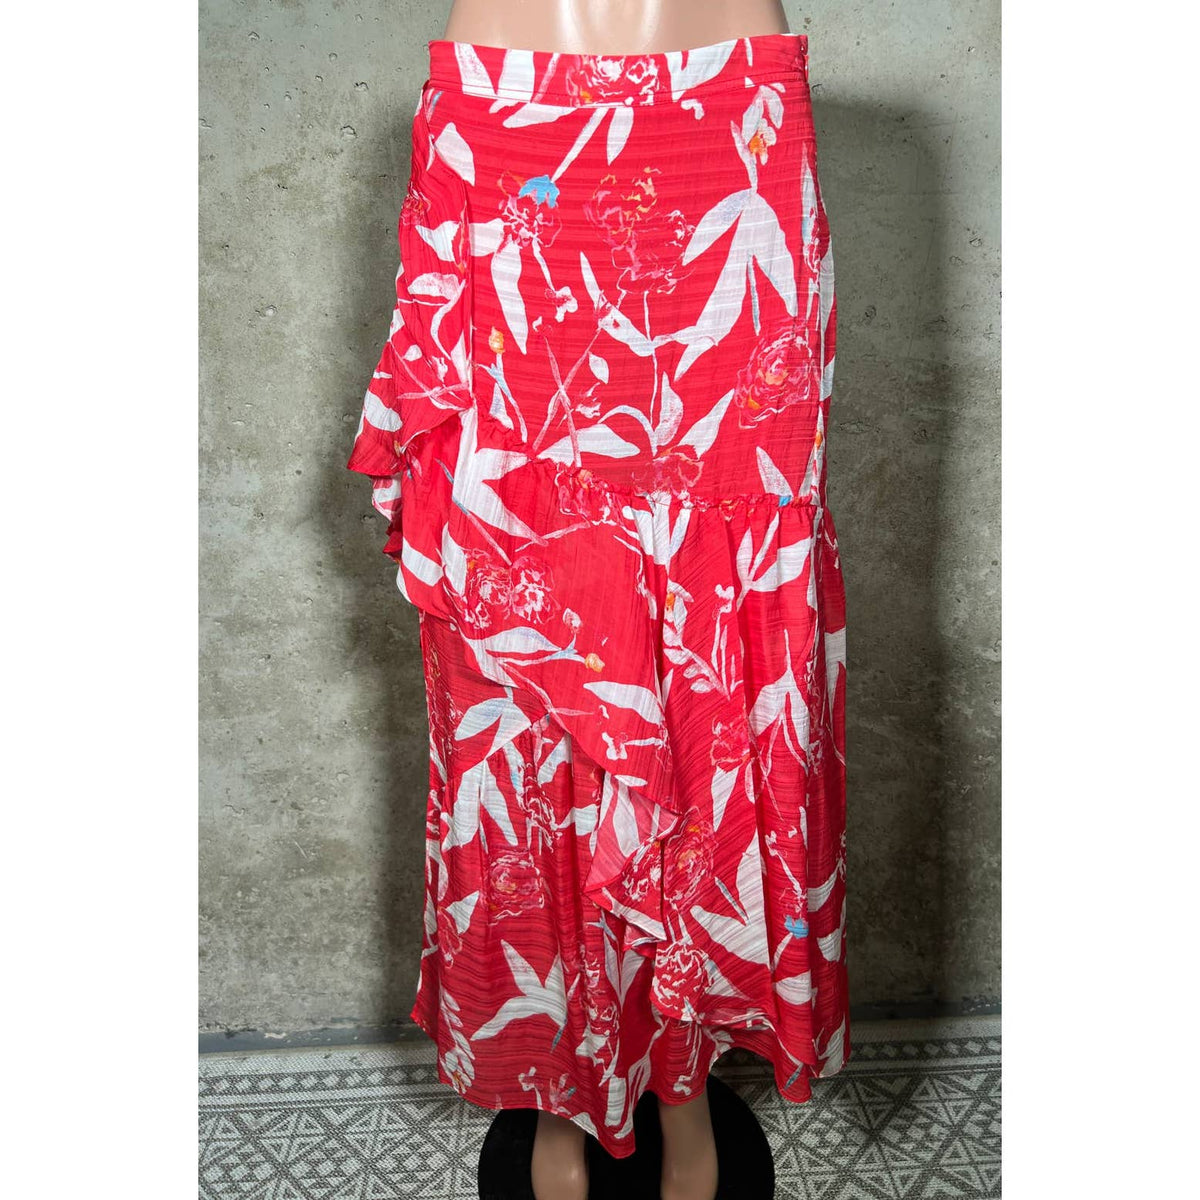 Tanya Taylor Red Floral Skirt Sz.10